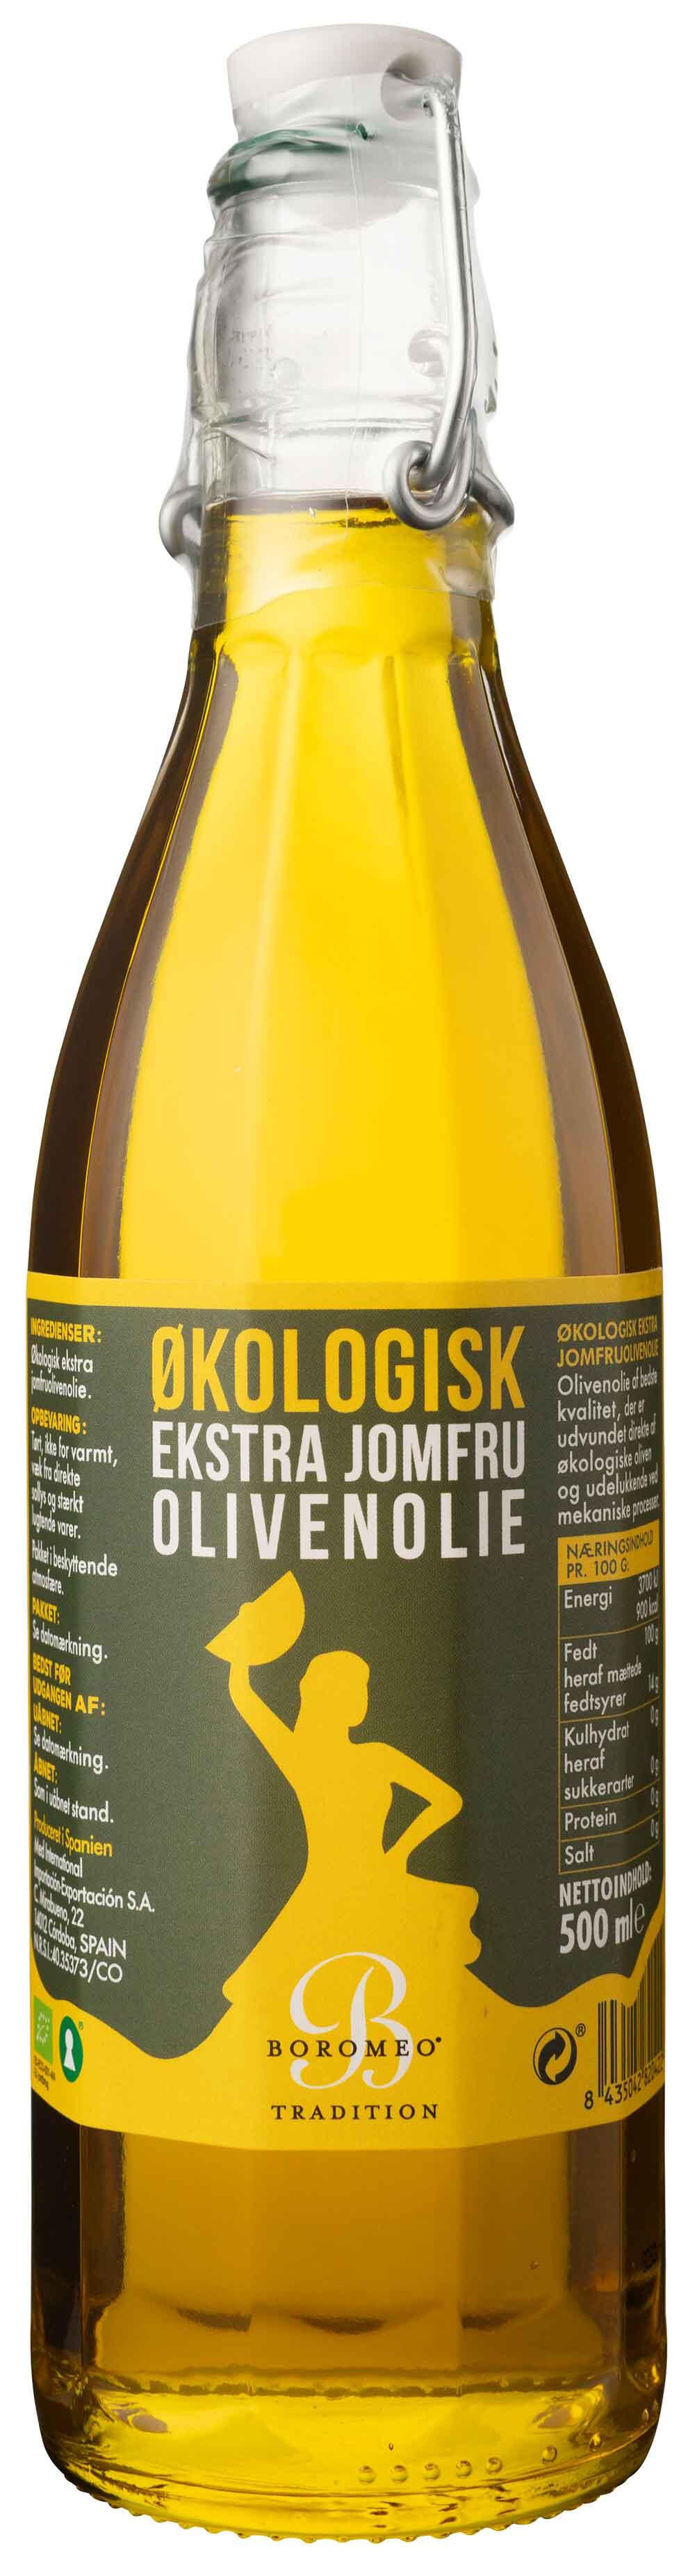 Økologisk Ekstra Jomfru olivenolie Boromeo